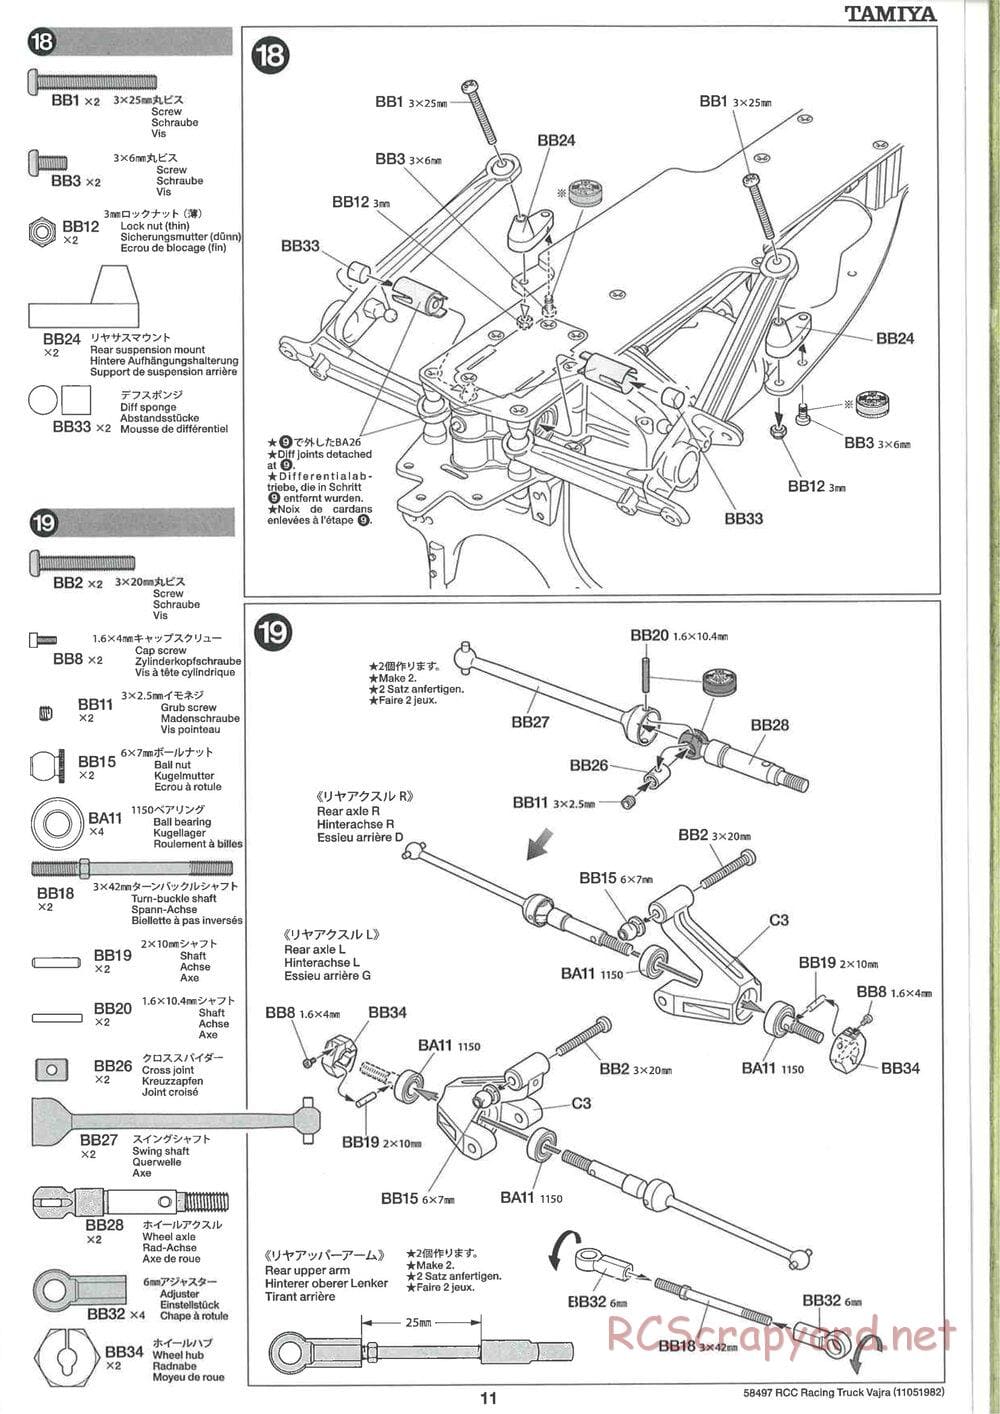 Tamiya - Vajra - AV Chassis - Manual - Page 11